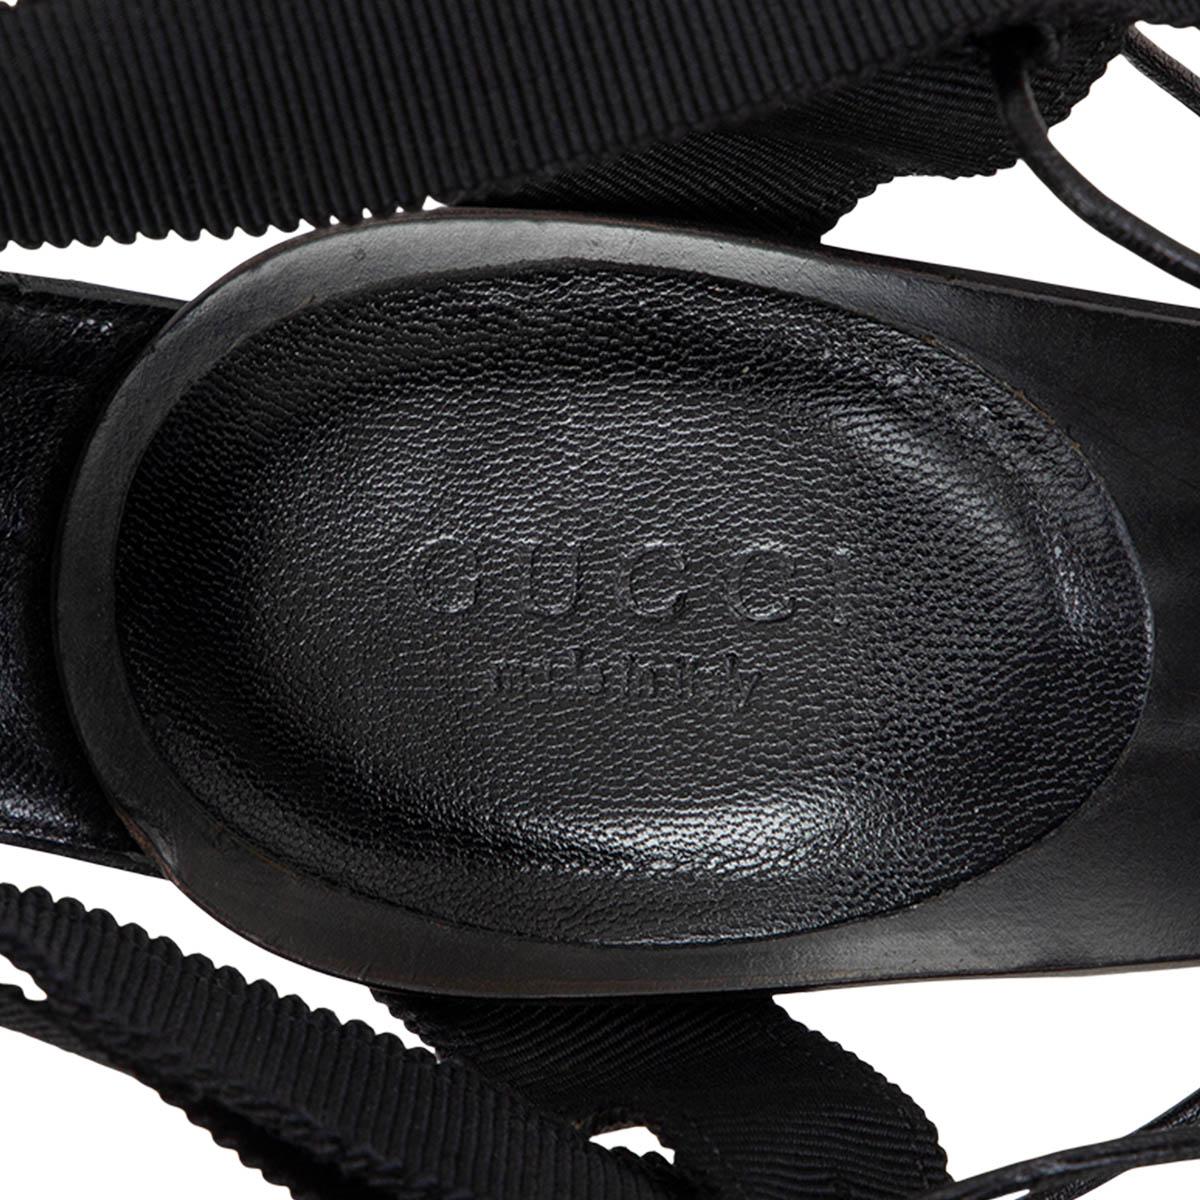 Black GUCCI x TOM FORD black leather & grosgrain Ankle Strap Sandals Shoes 38 C